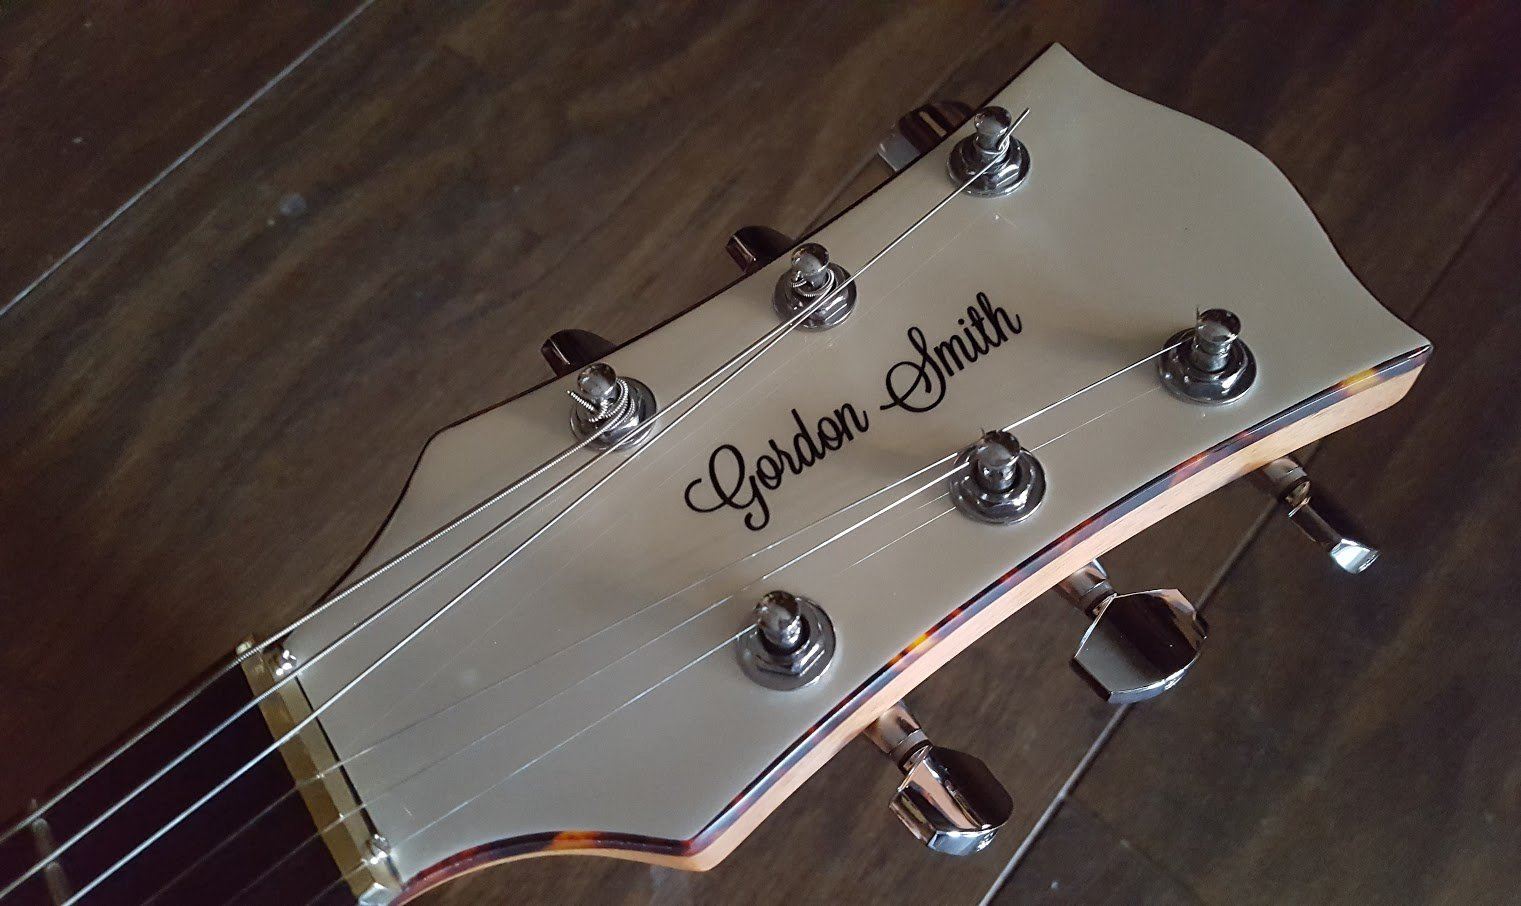 Gordon Smith GS1000 Vintage White, Electric Guitar for sale at Richards Guitars.